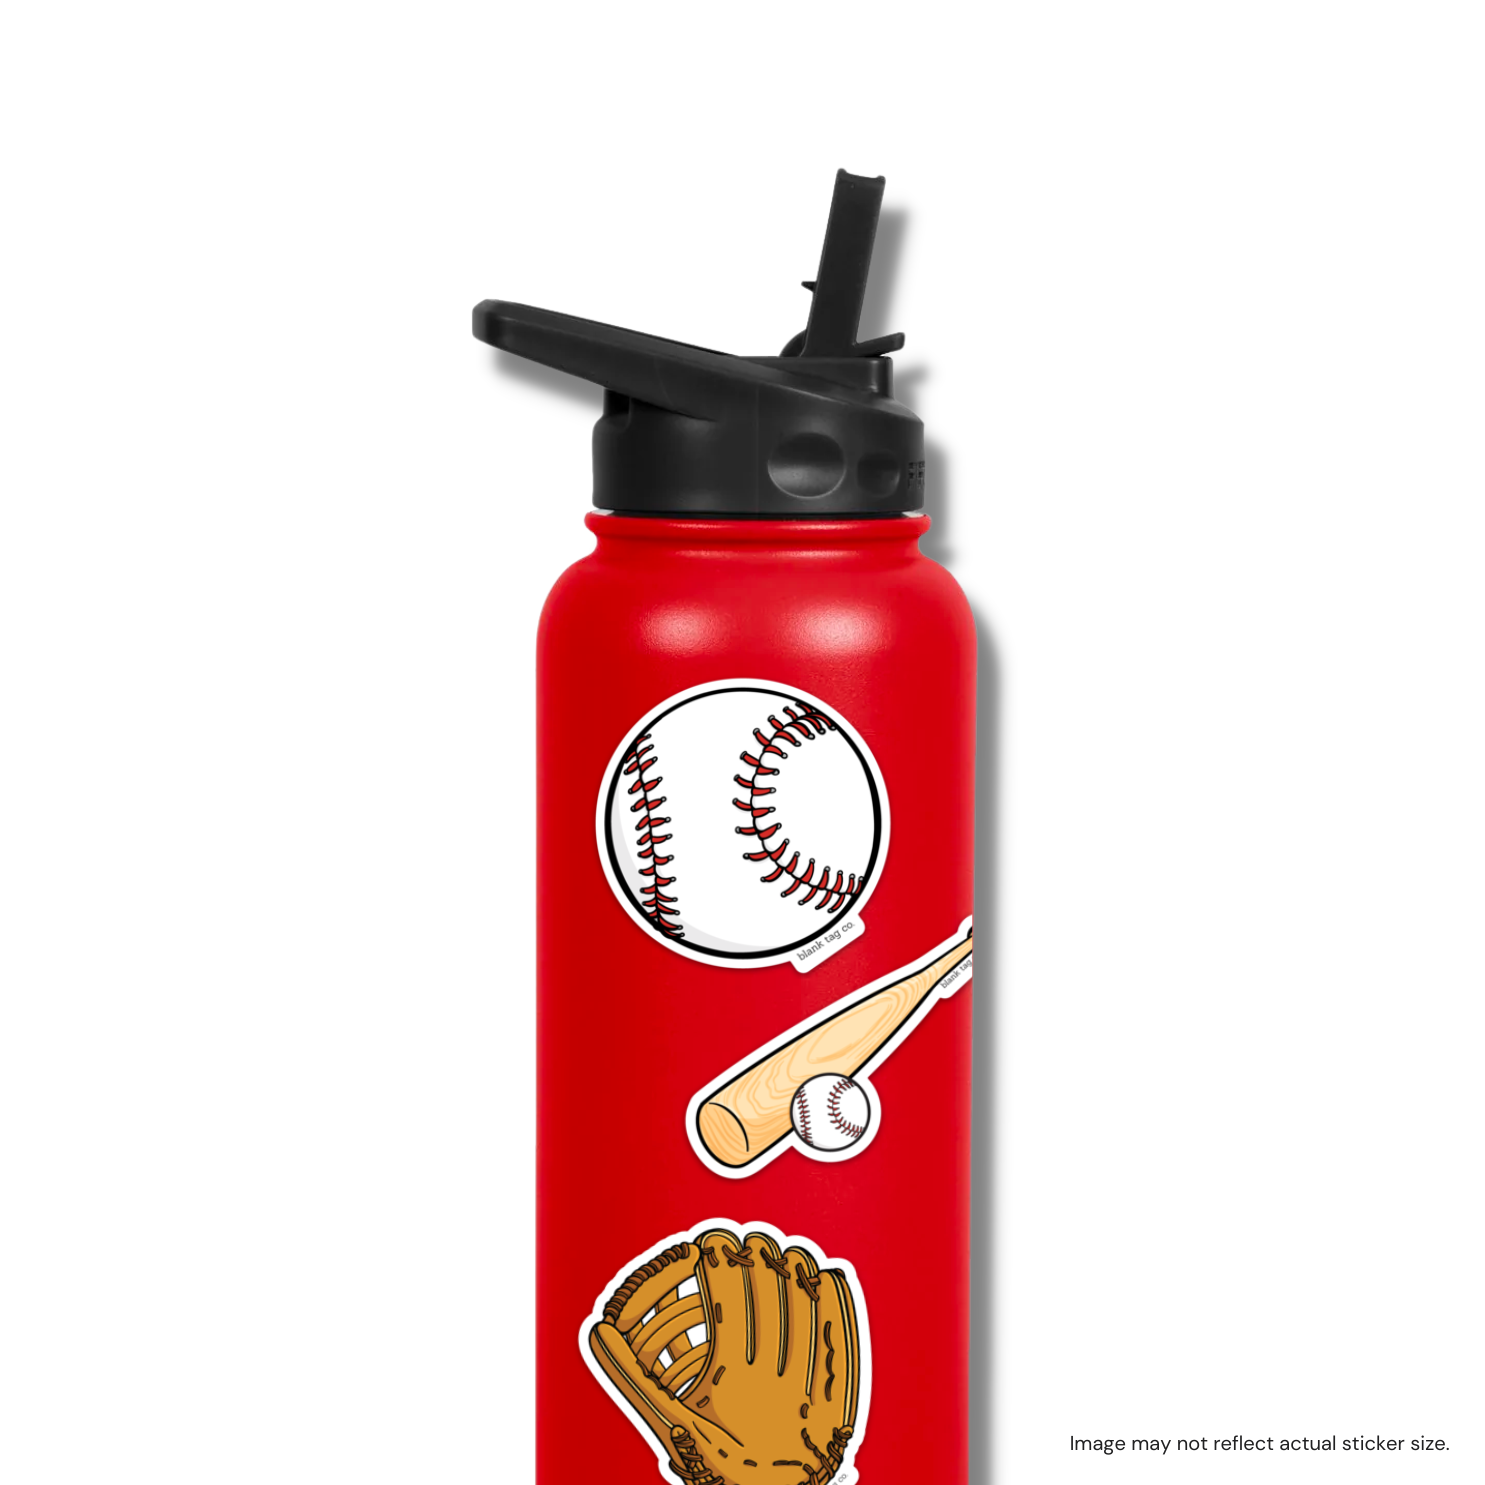 The Baseball Sticker